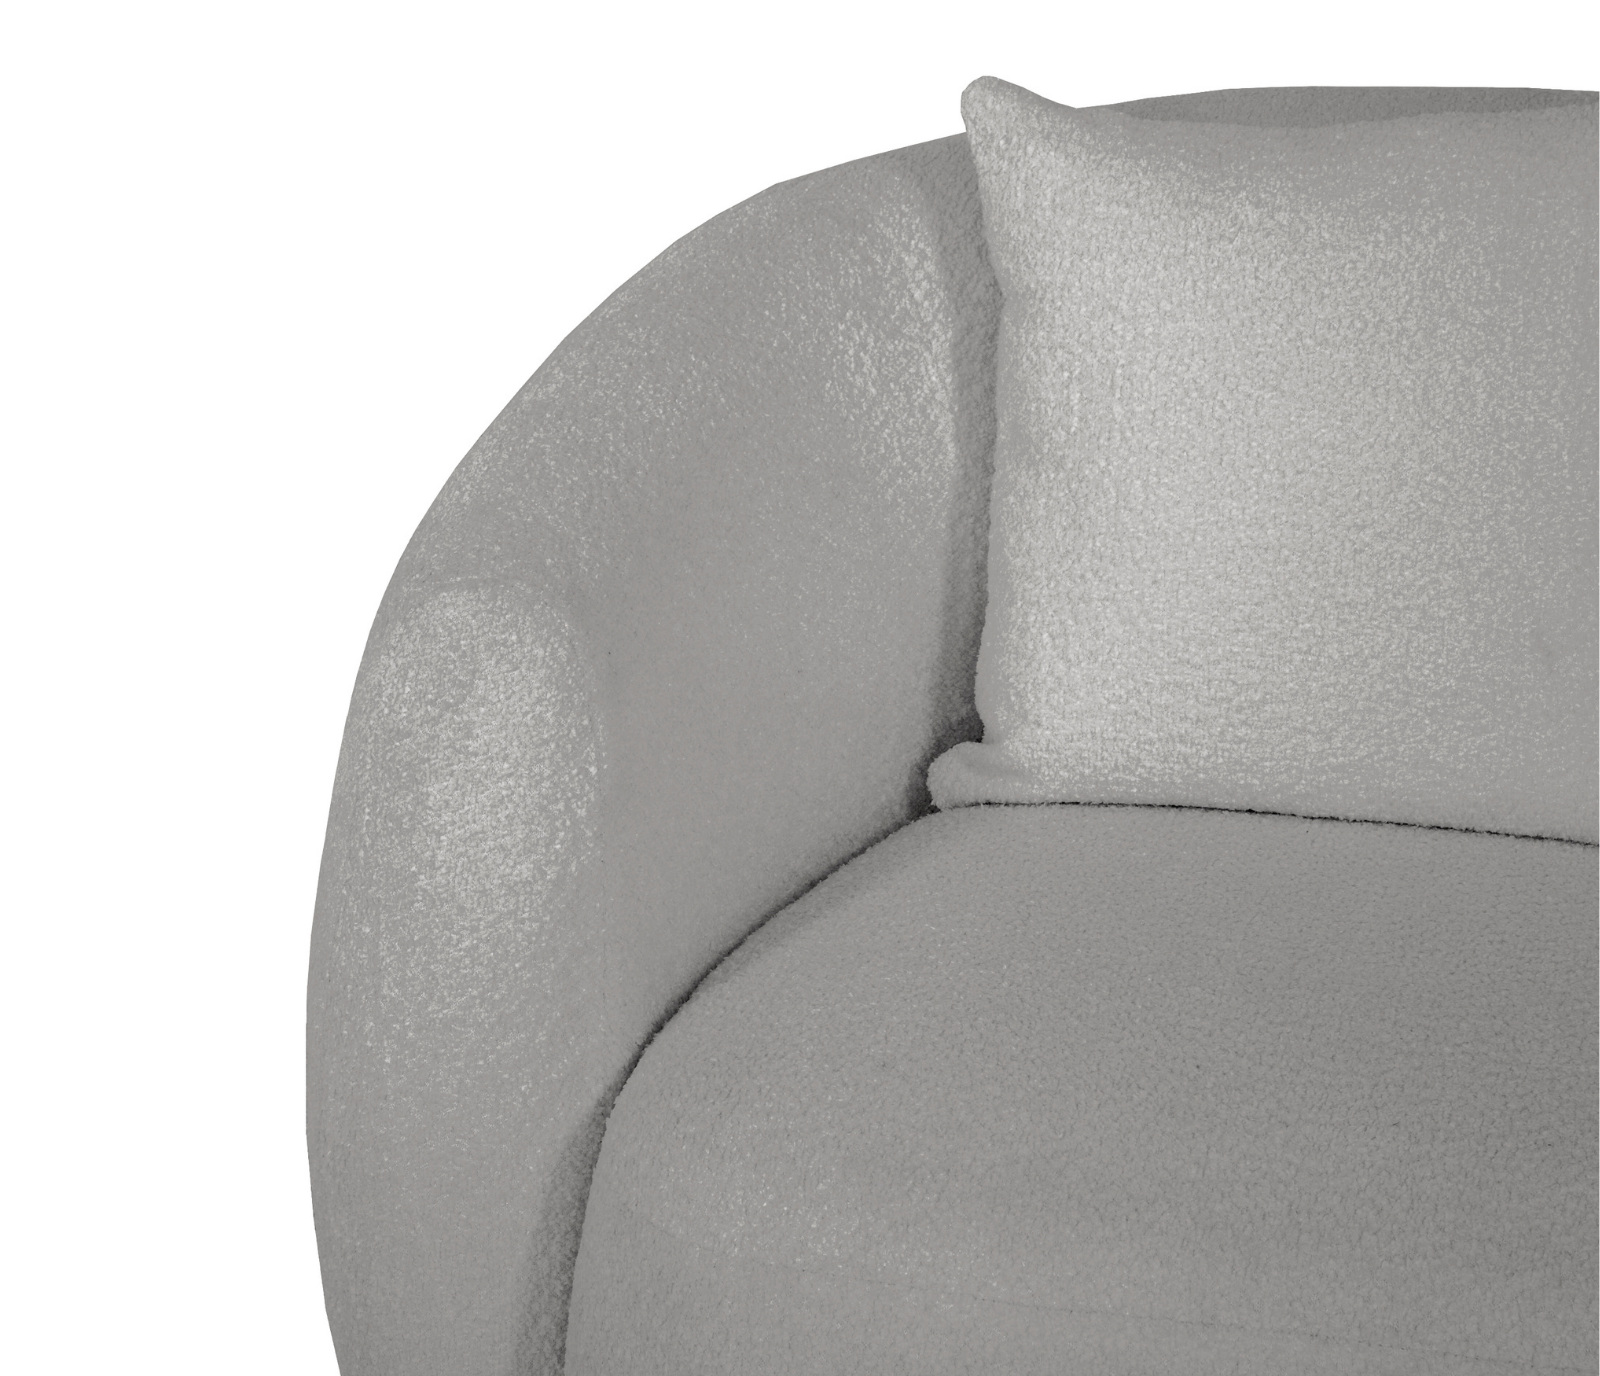 Alba Curve 4 Seater Sofa - Pewter Boucle Fabric